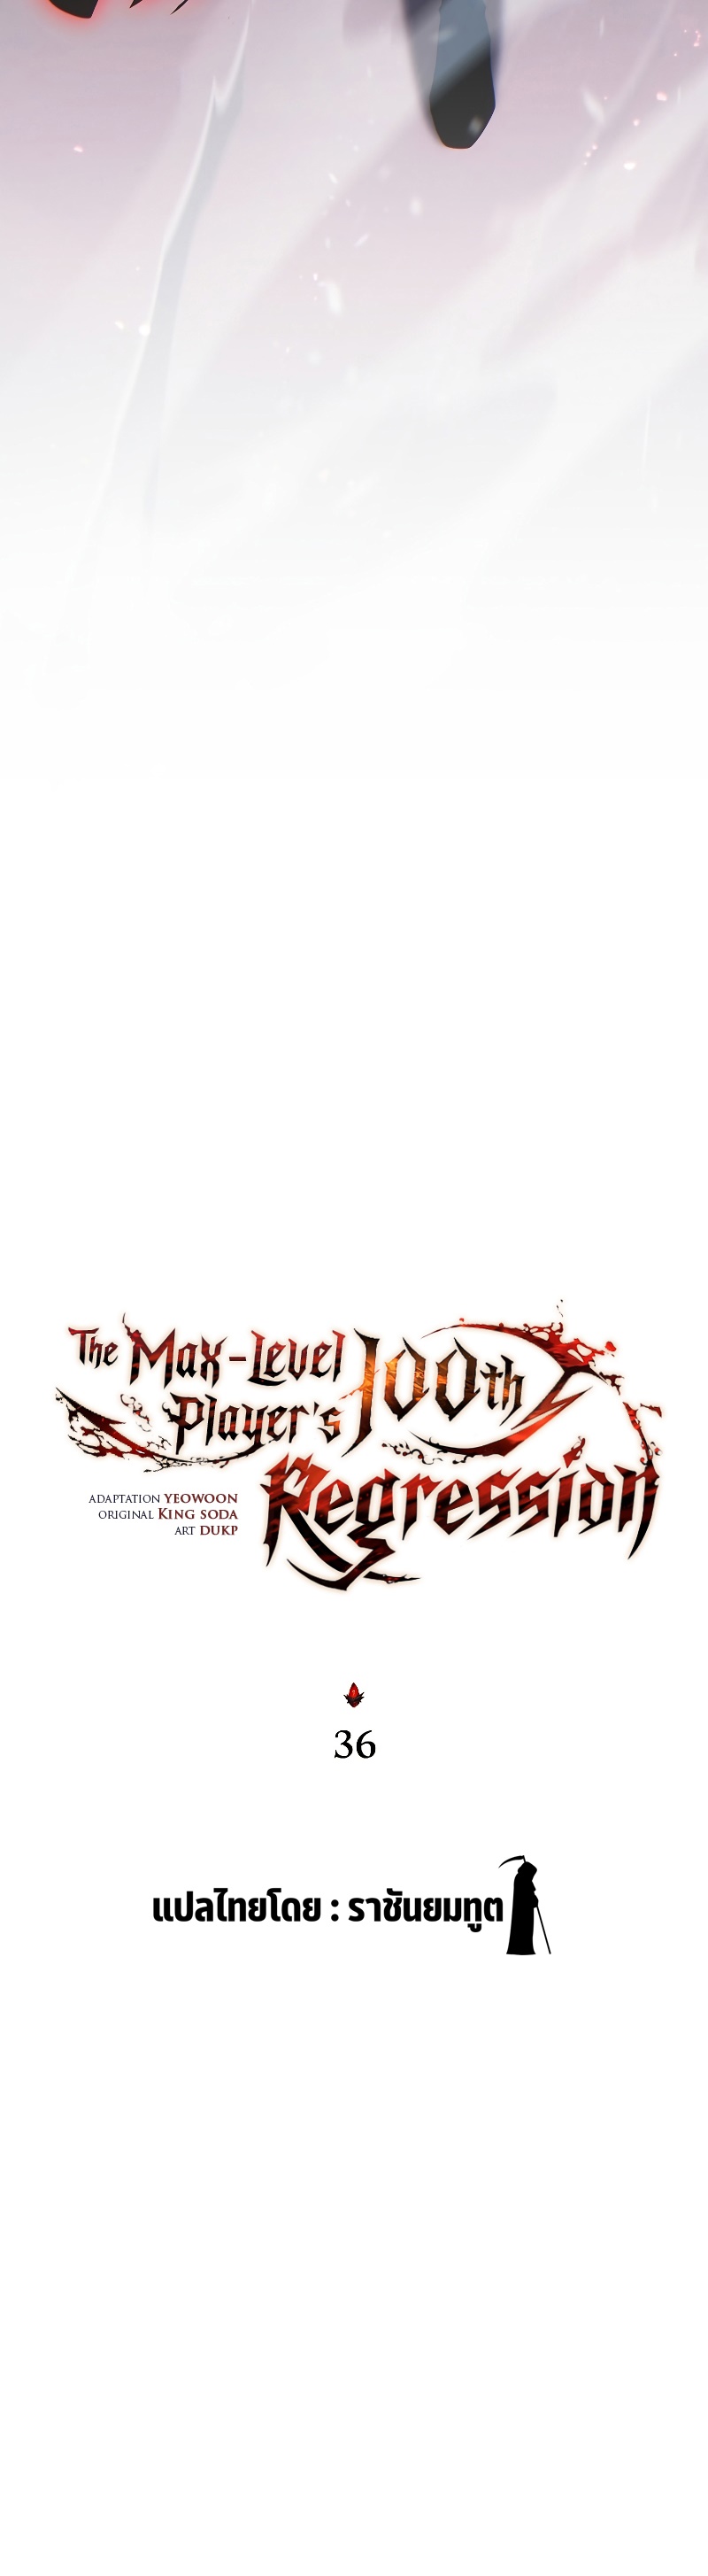 the max level player 100th regression 36.22